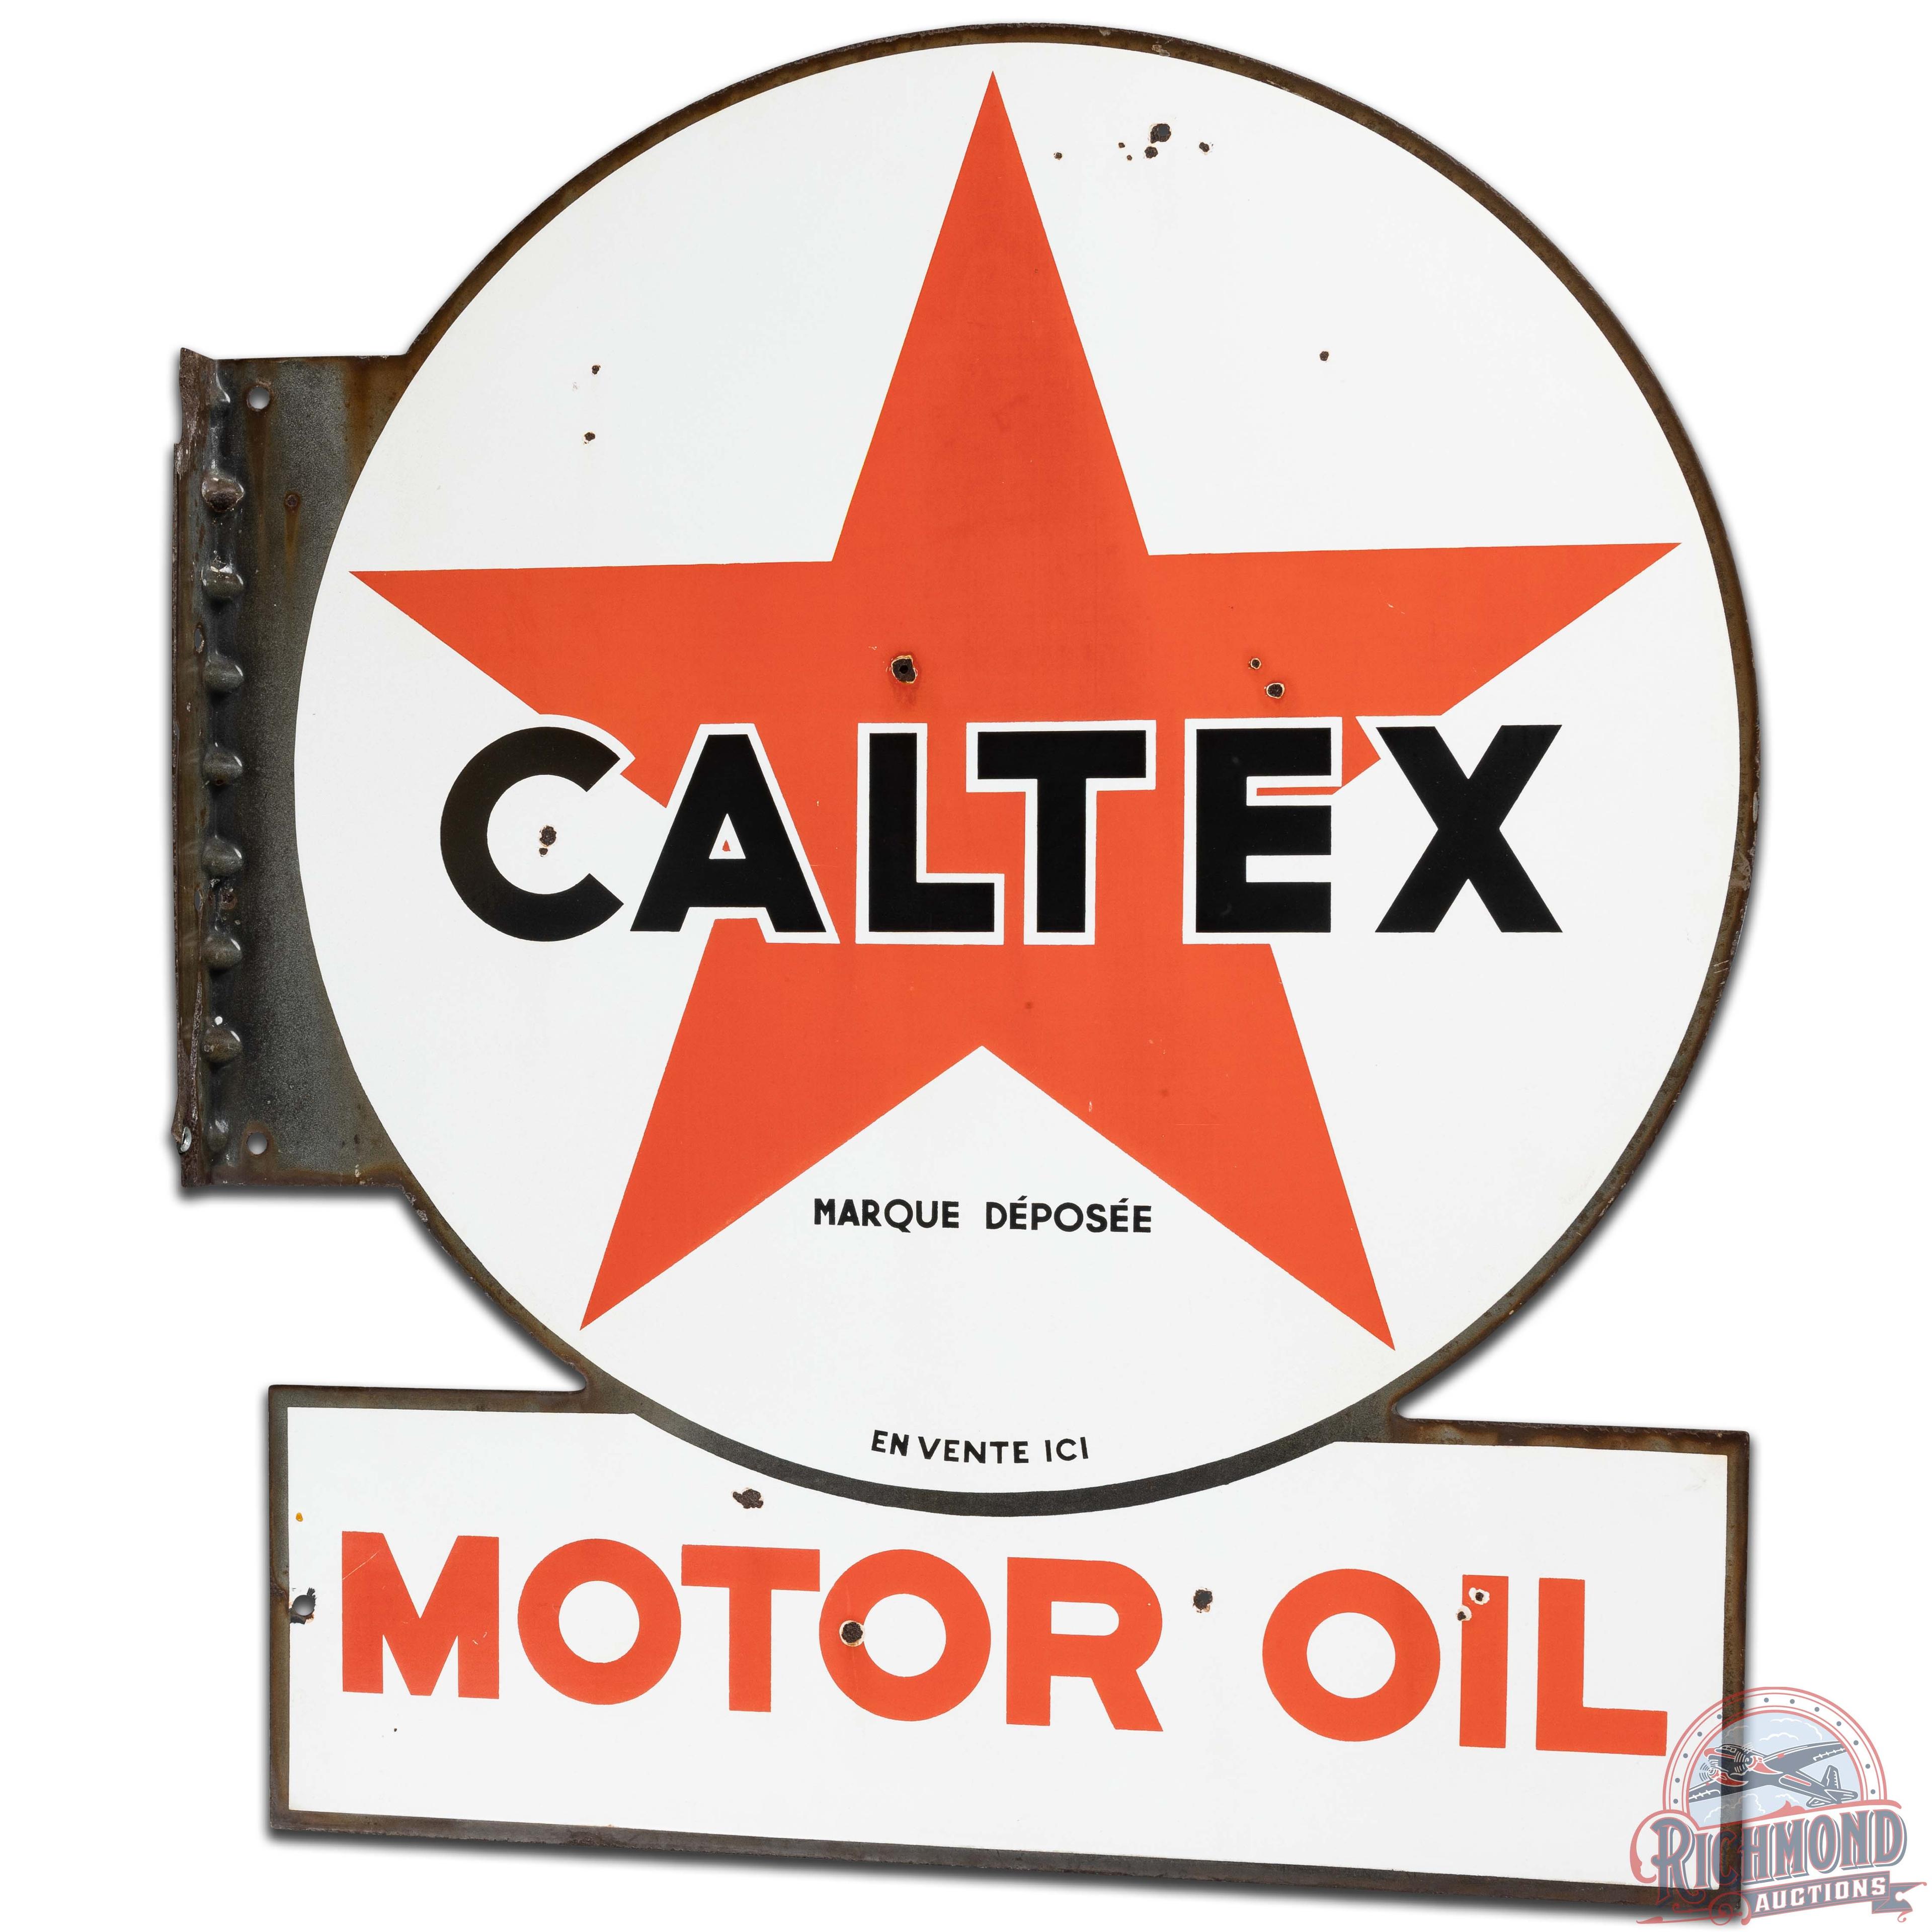 Caltex Motor Oil Die Cut DS Porcelain Flange Sign w/ Logo